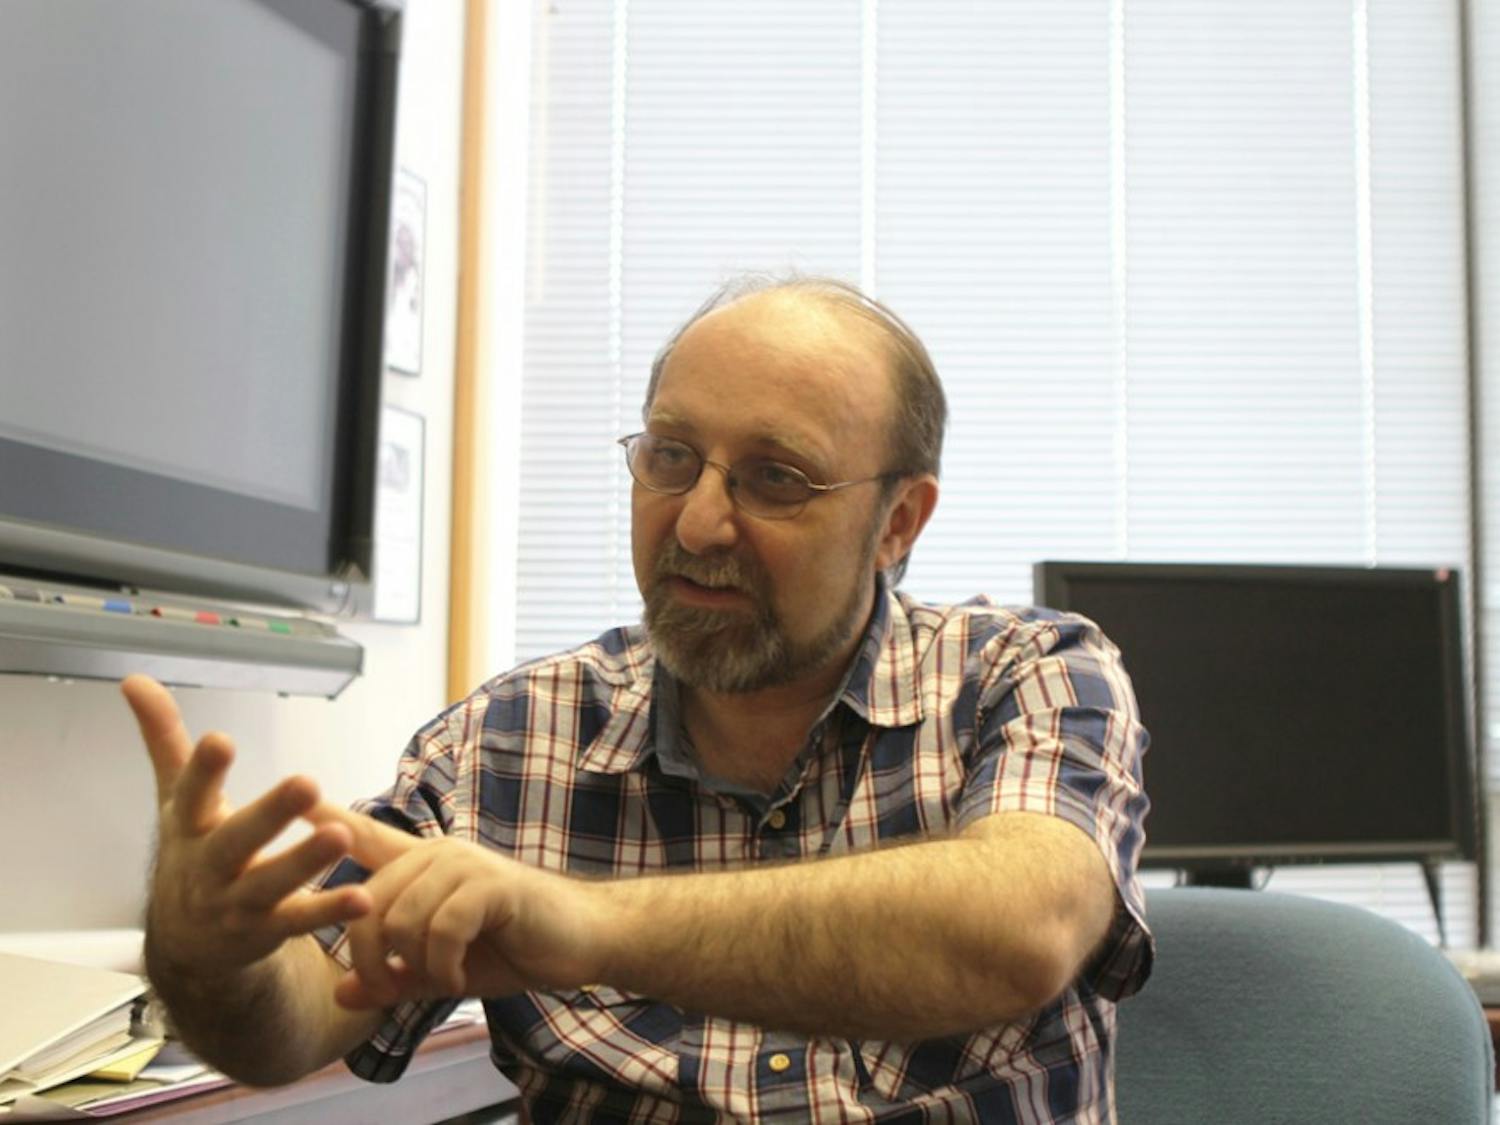 Dr. Miguel Nicolelis has made strides in neuroengineering research.